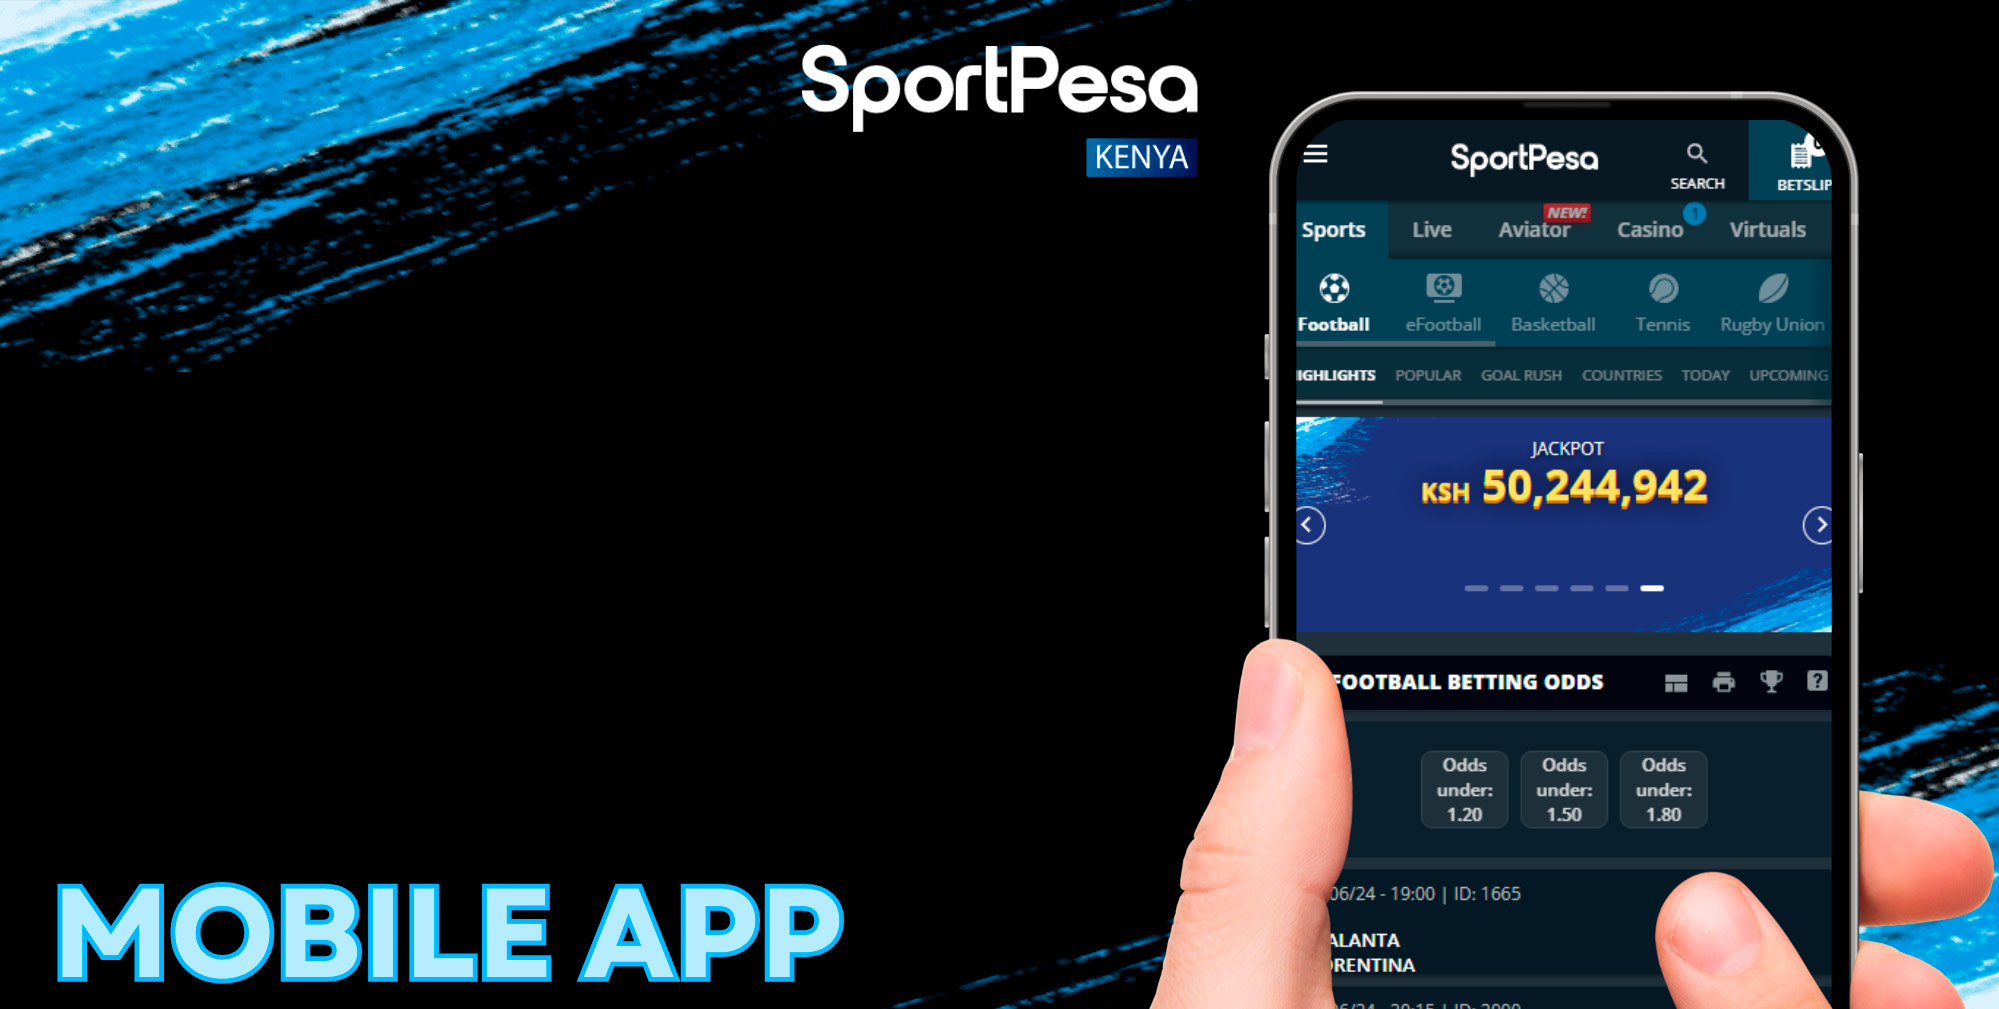 The Sportpesa mobile app version